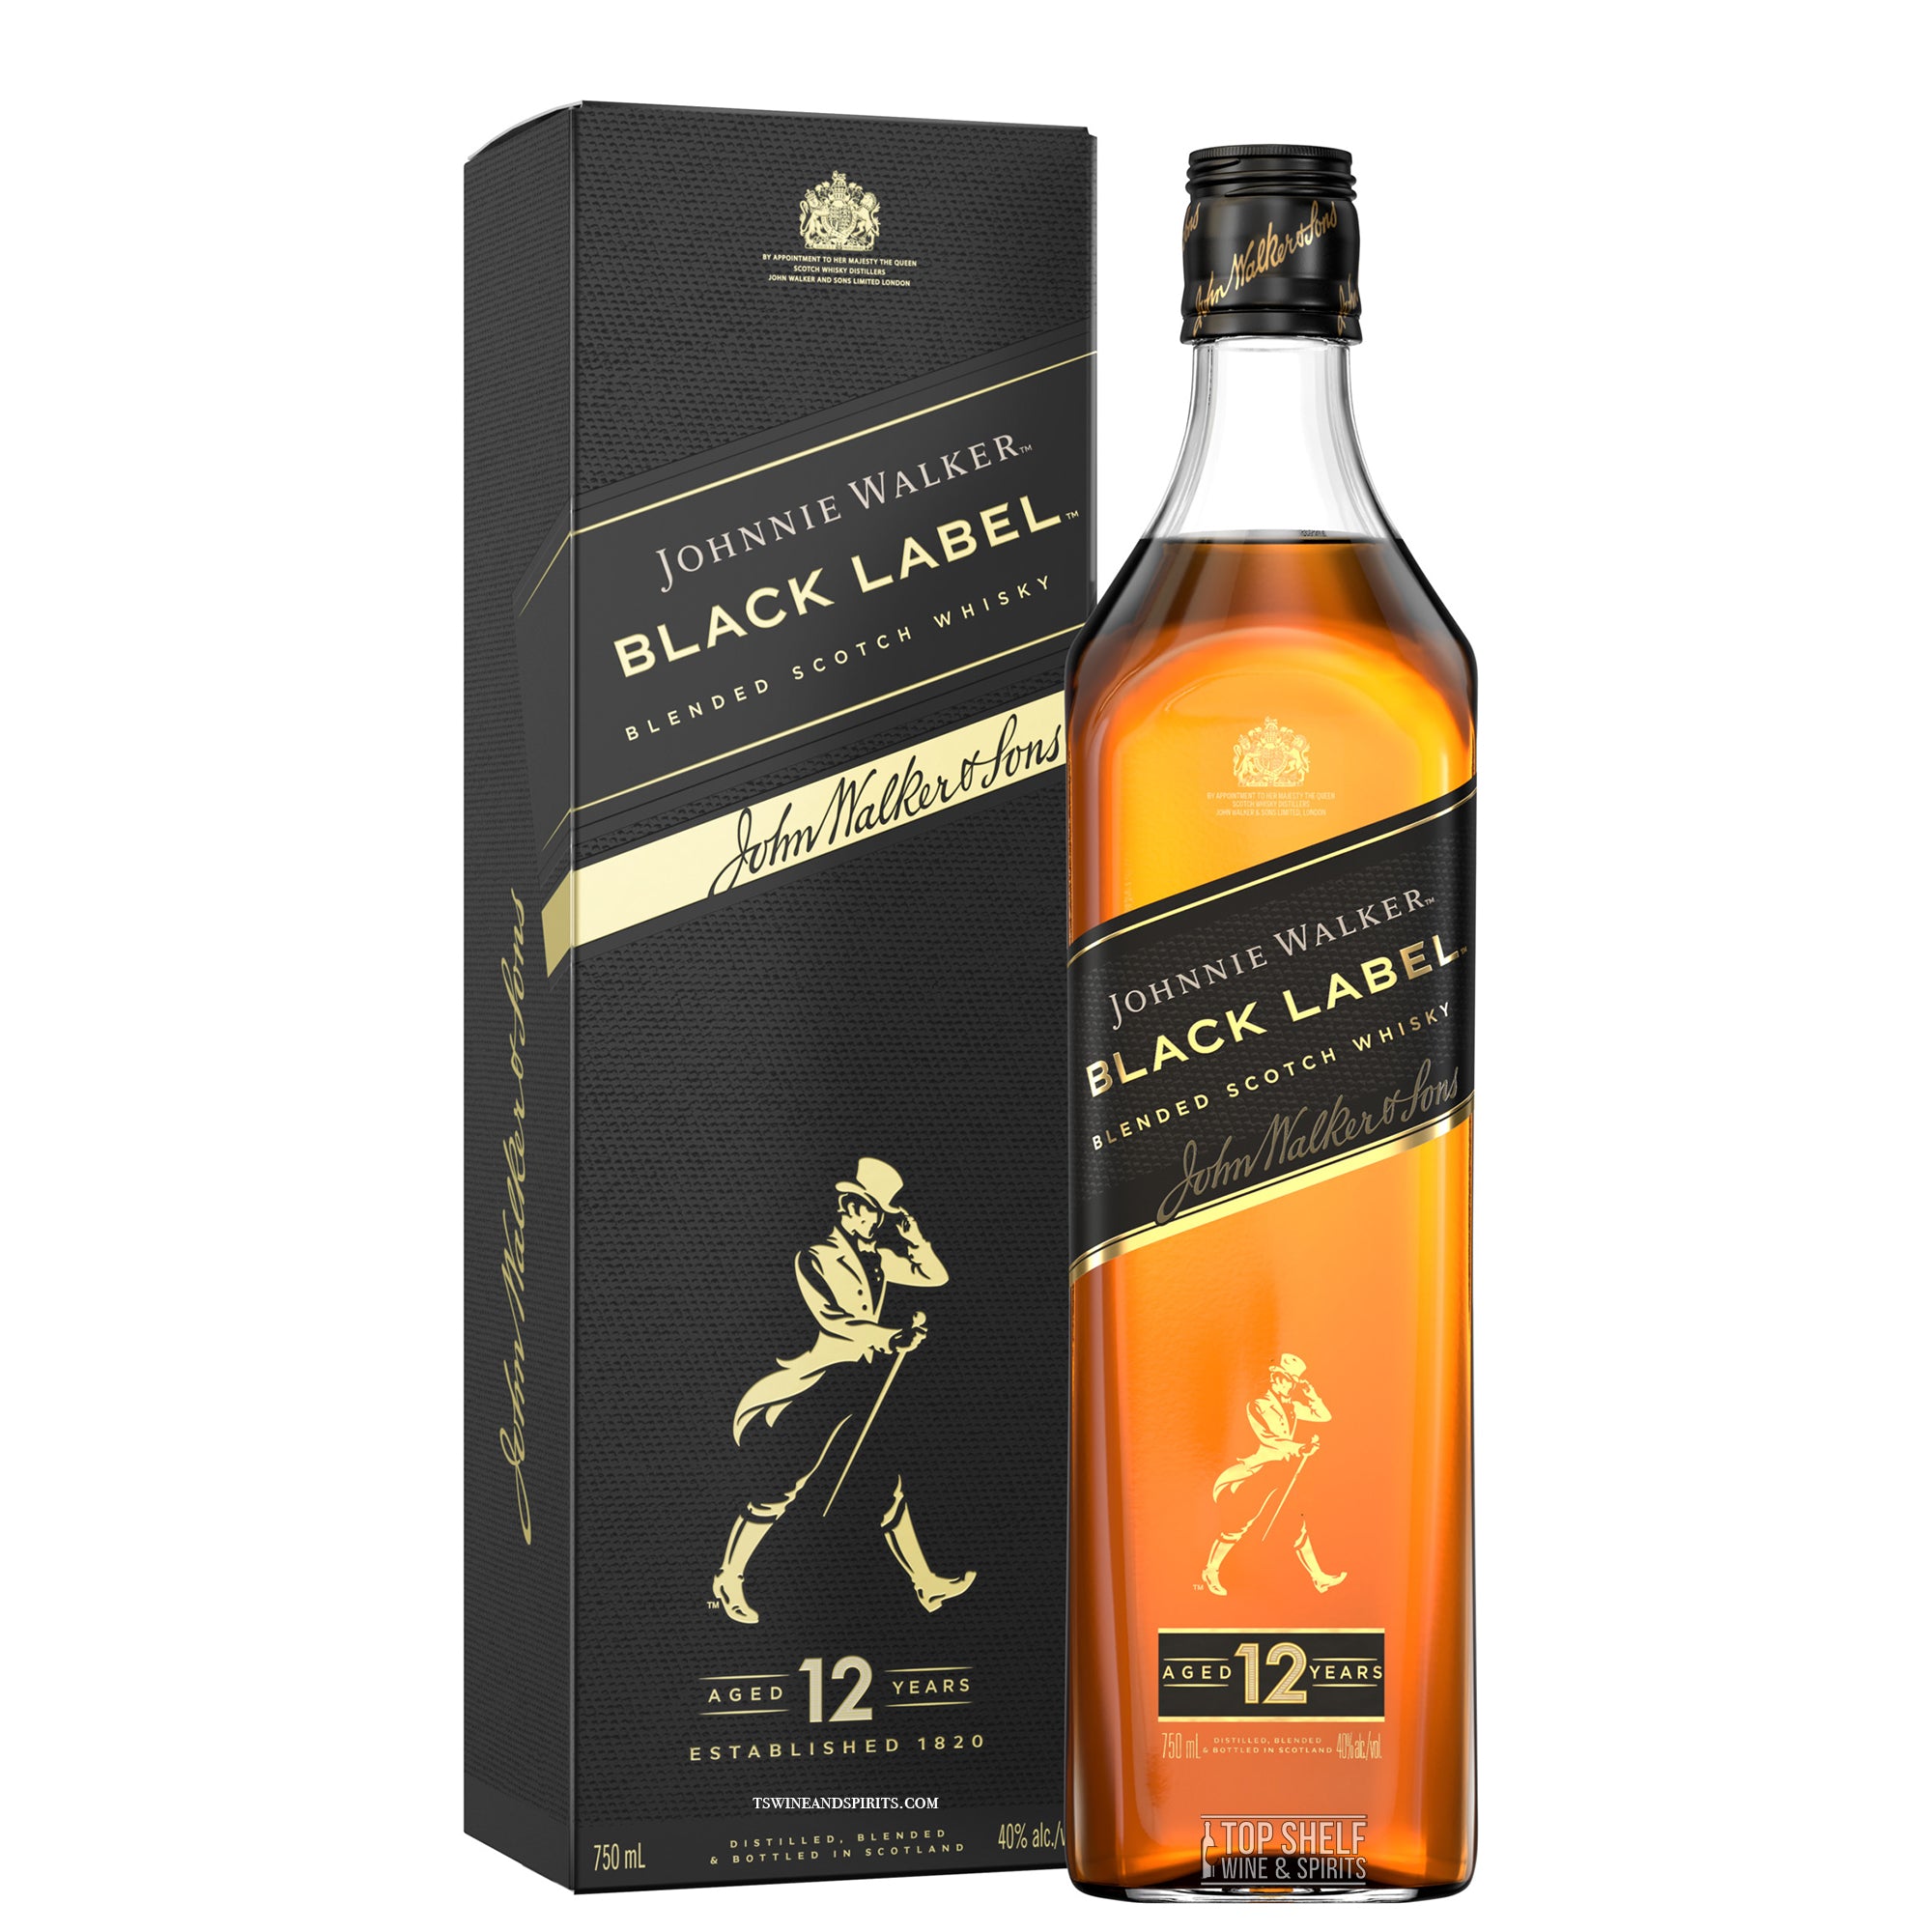 Johnnie Walker Black Label | Dor to Delivery your 750mL